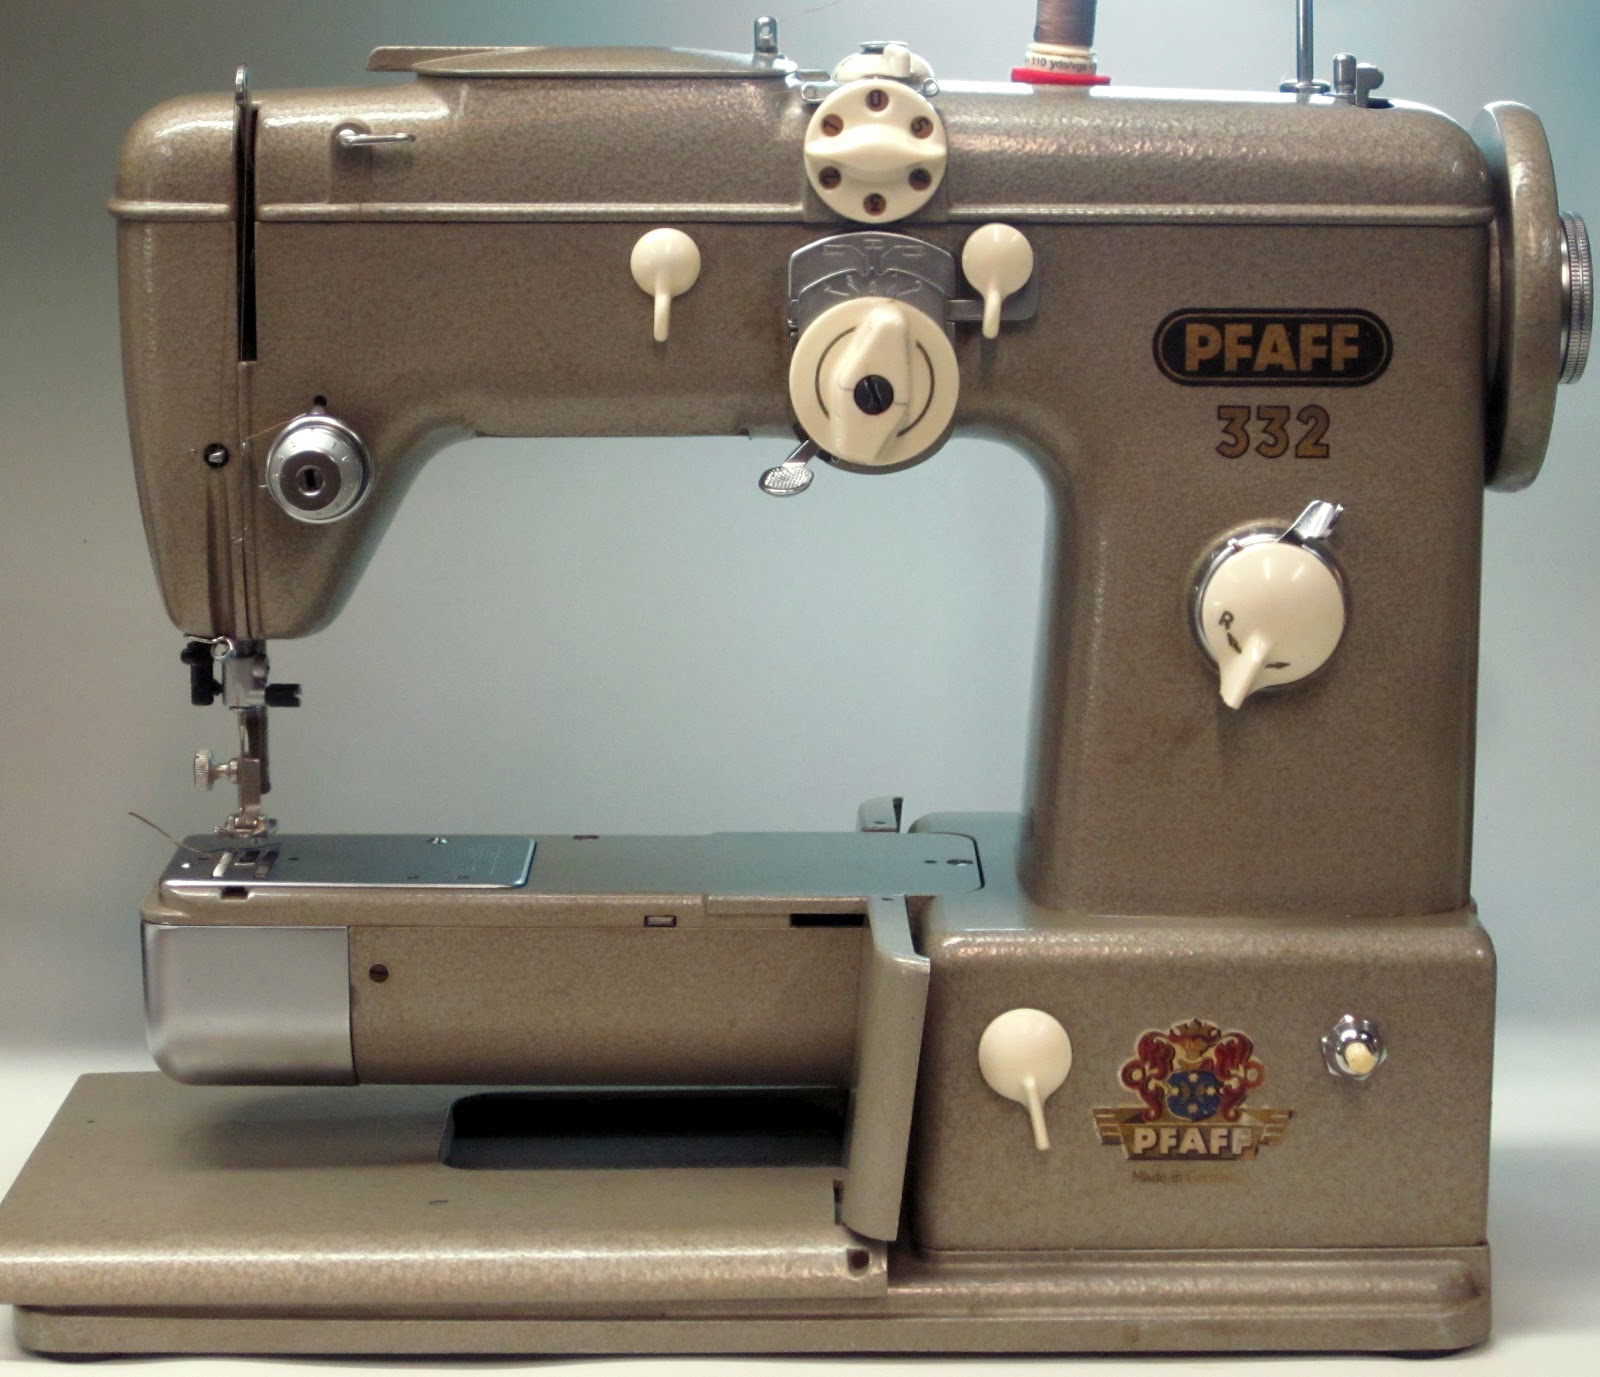 MI Vintage Sewing Machines: Pfaff 332 (1957)